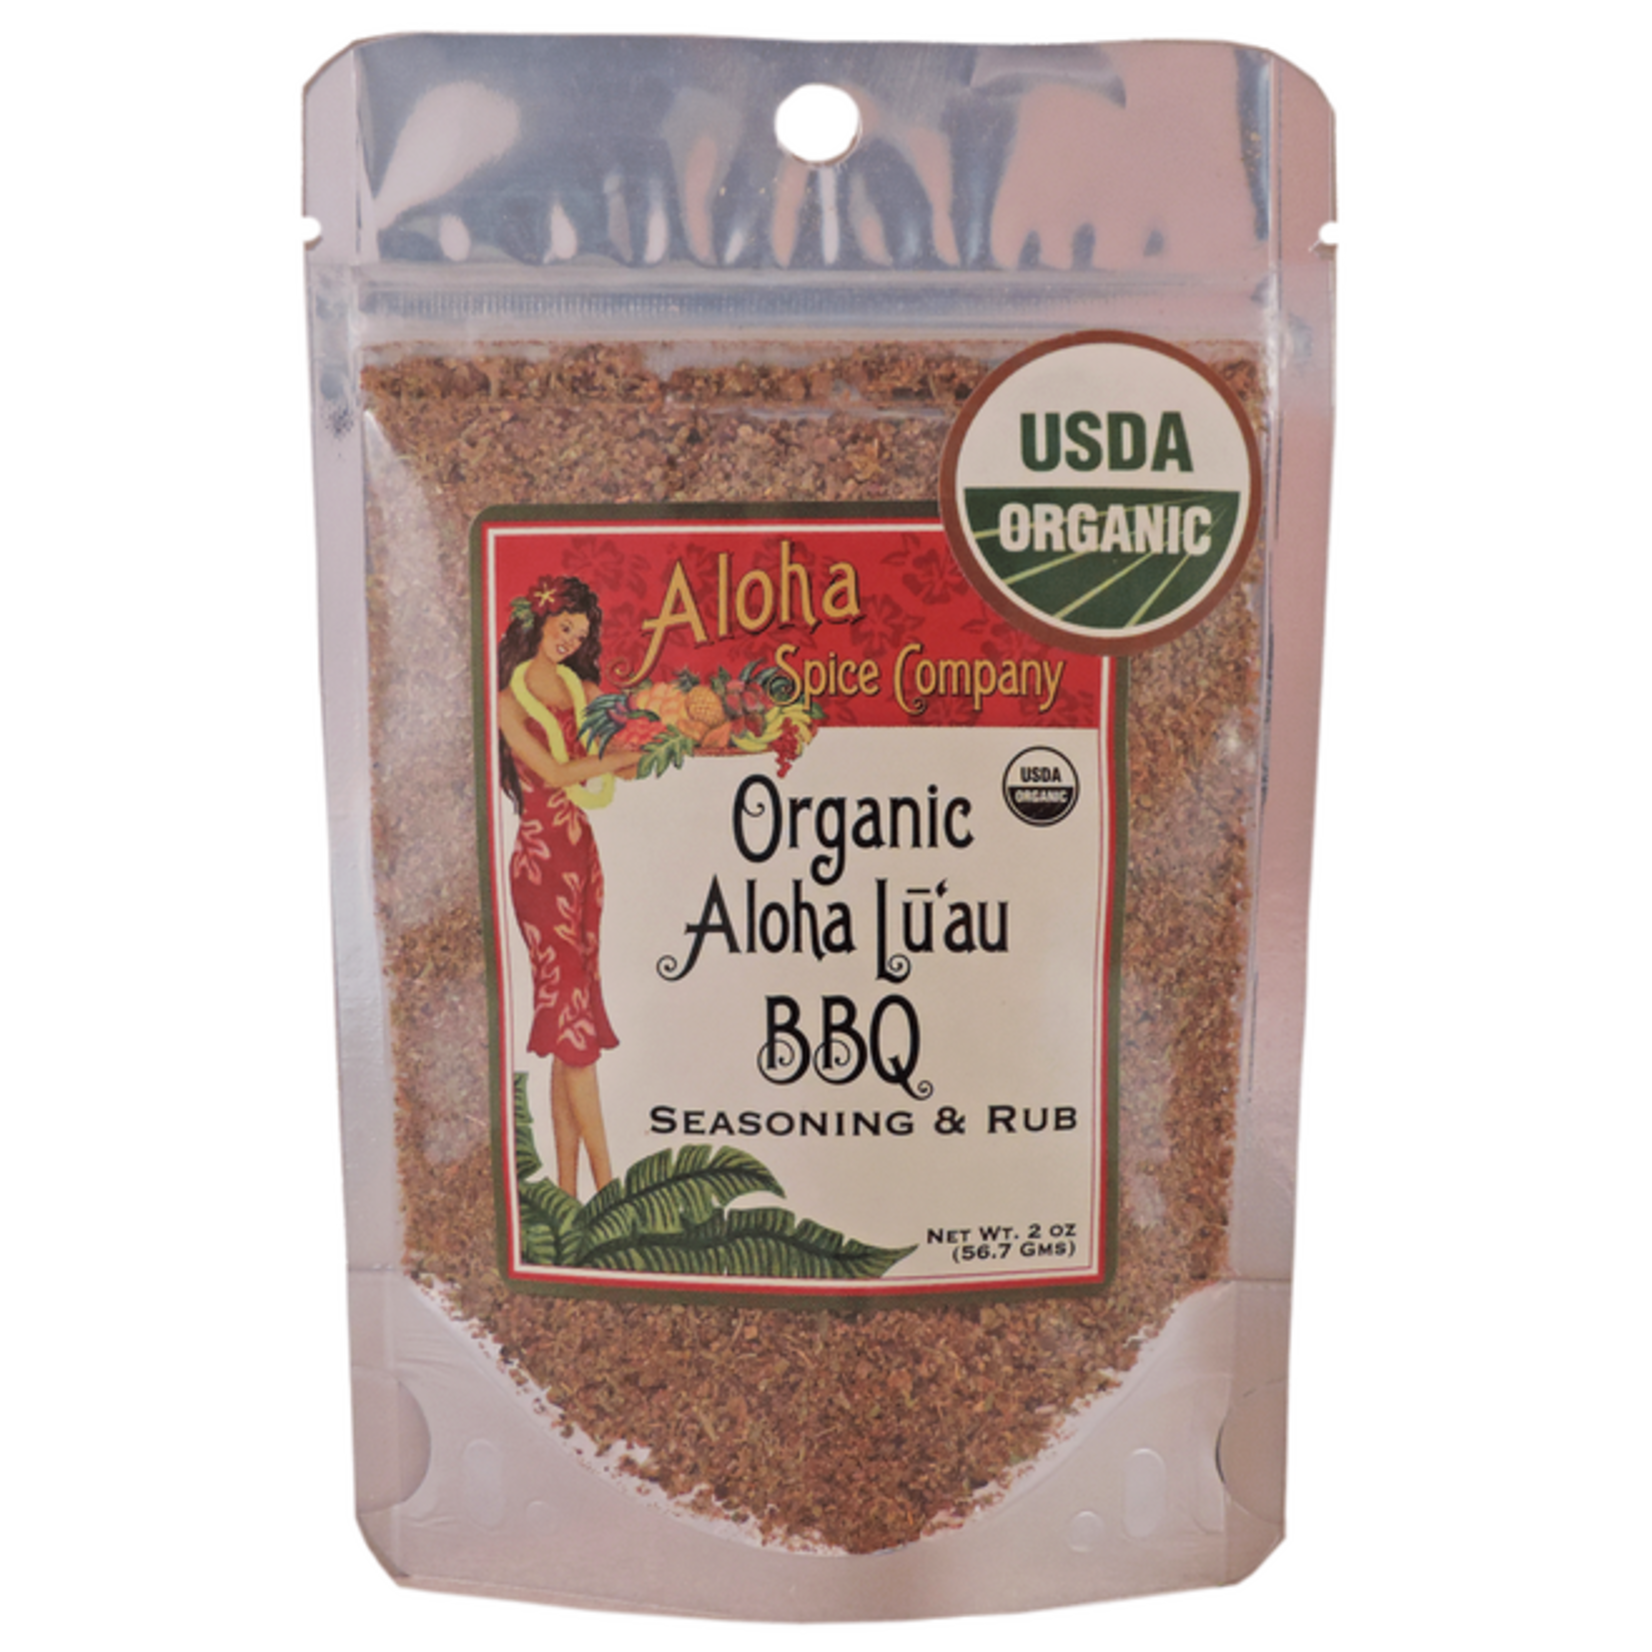 Aloha Spice Co. Organic Aloha Luau BBQ Seasoning & Rub